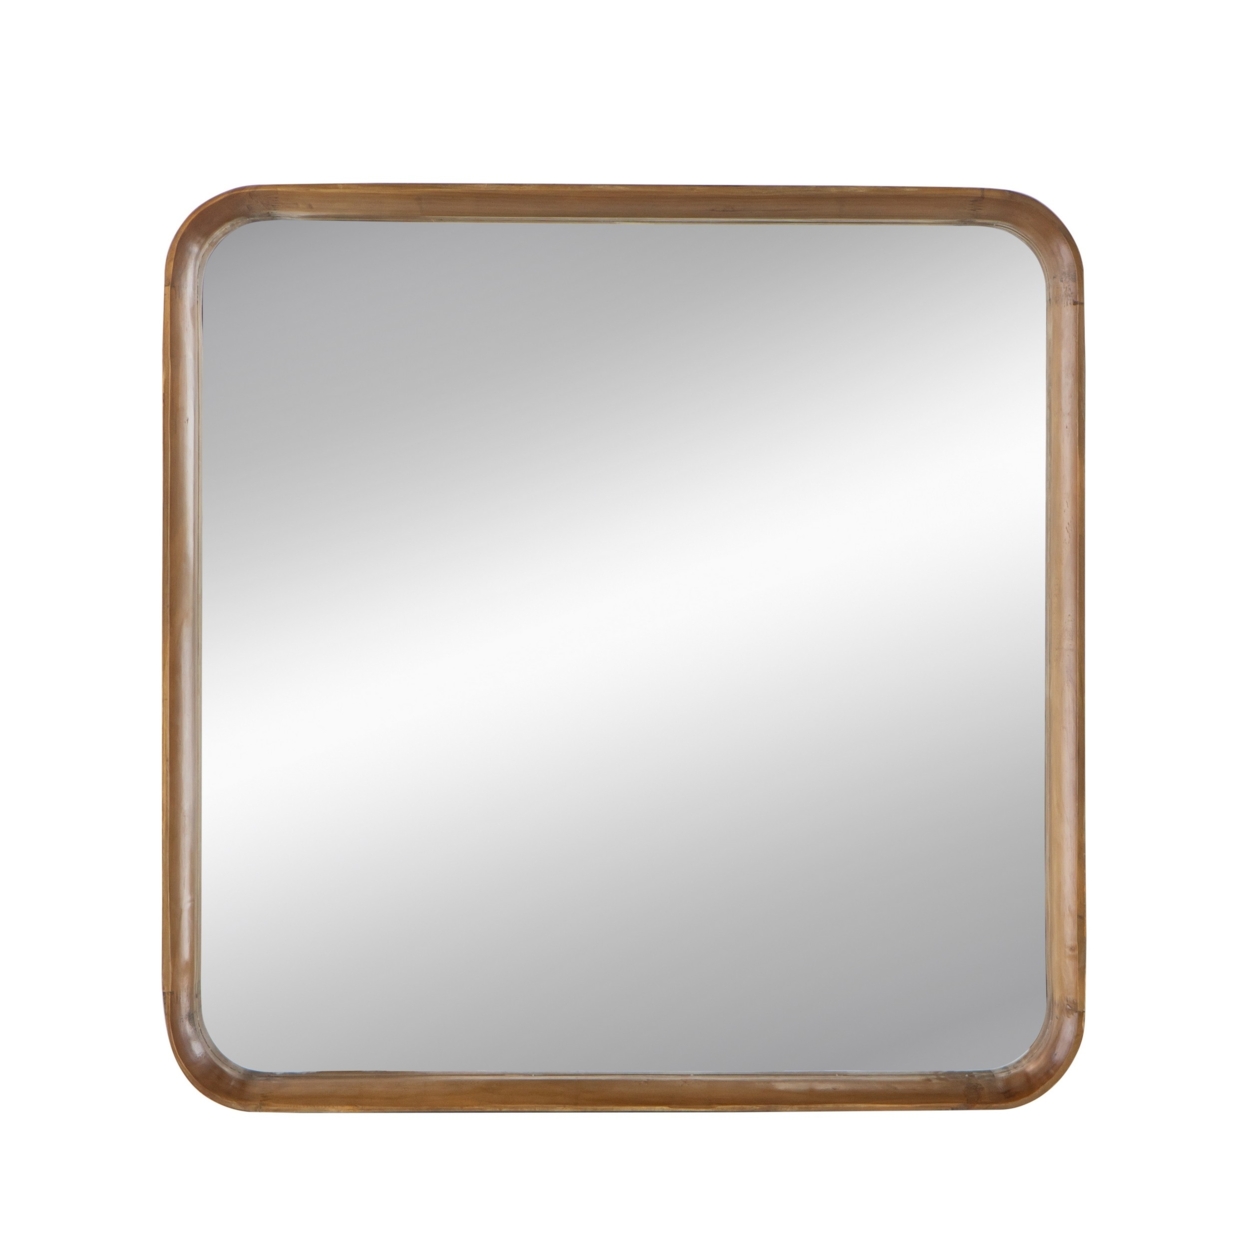 Roe 32 Inch Wall Mirror, Brown Curved Pine Wood Frame, Minimalistic- Saltoro Sherpi